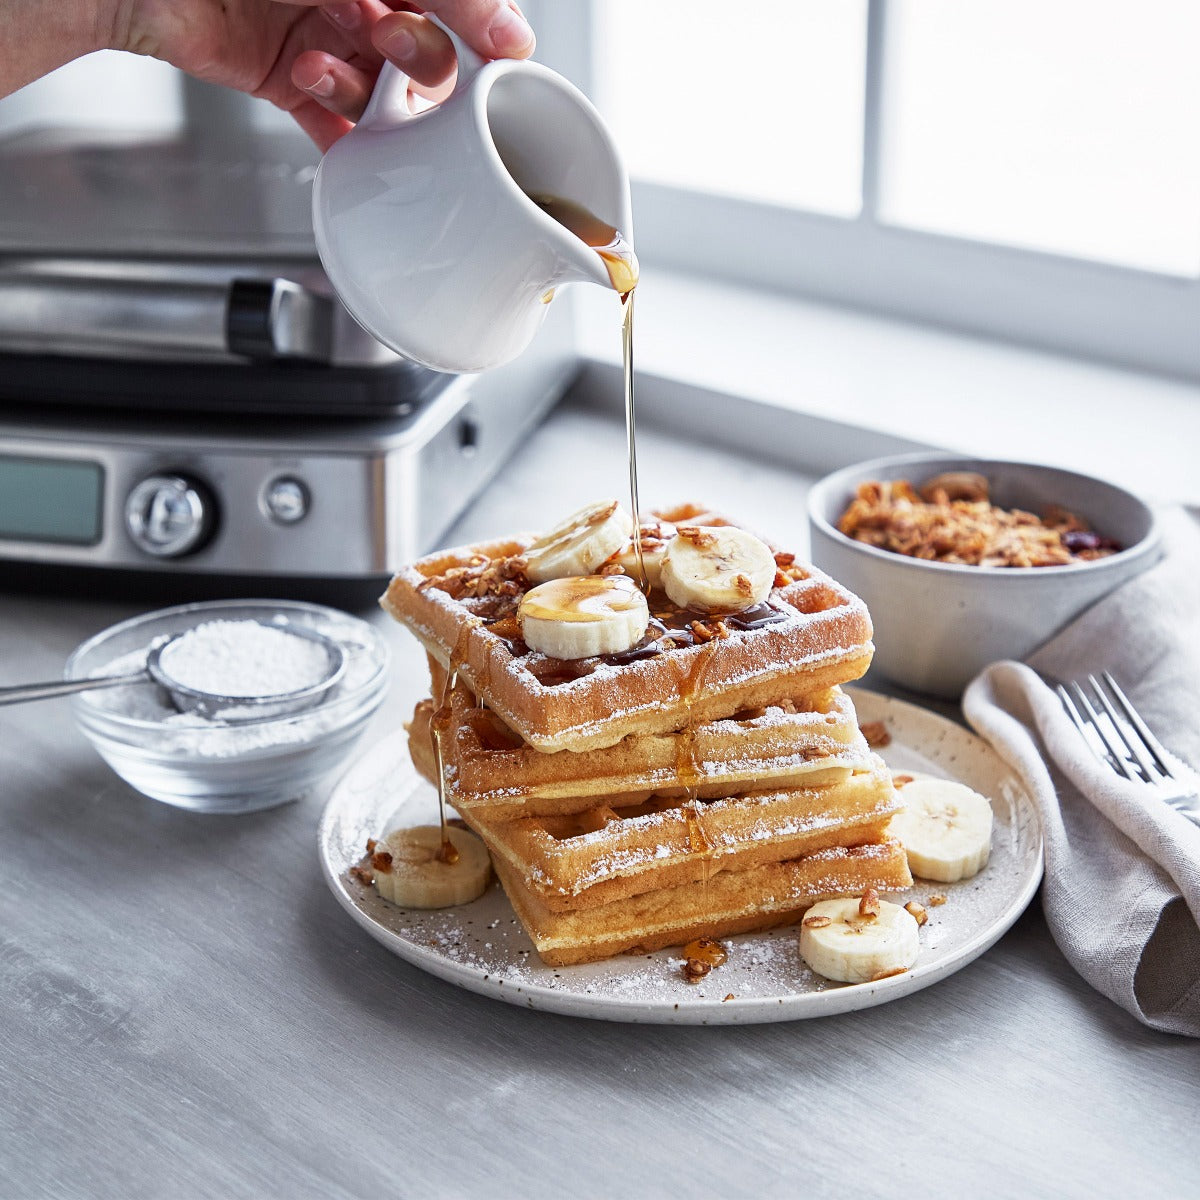 GreenPan Elite Ceramic Nonstick 4-Square Waffle Maker — Las Cosas Kitchen  Shoppe